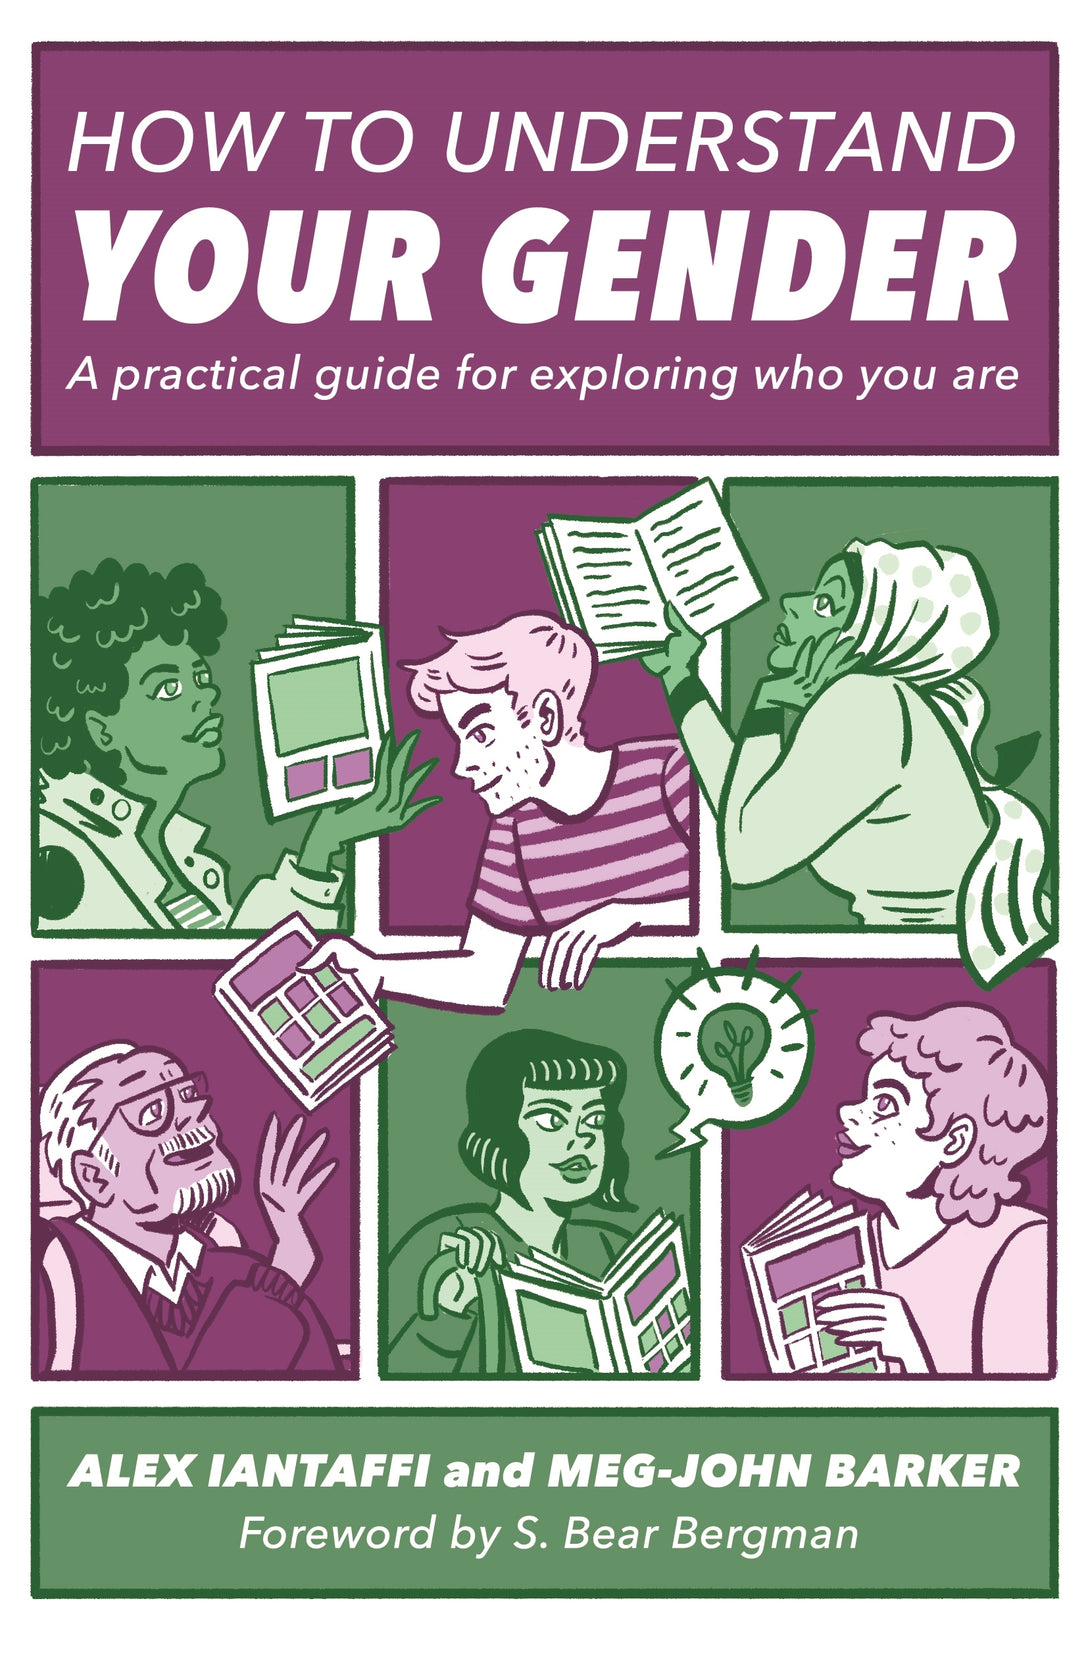 How to Understand Your Gender by Alex Iantaffi, Meg-John Barker